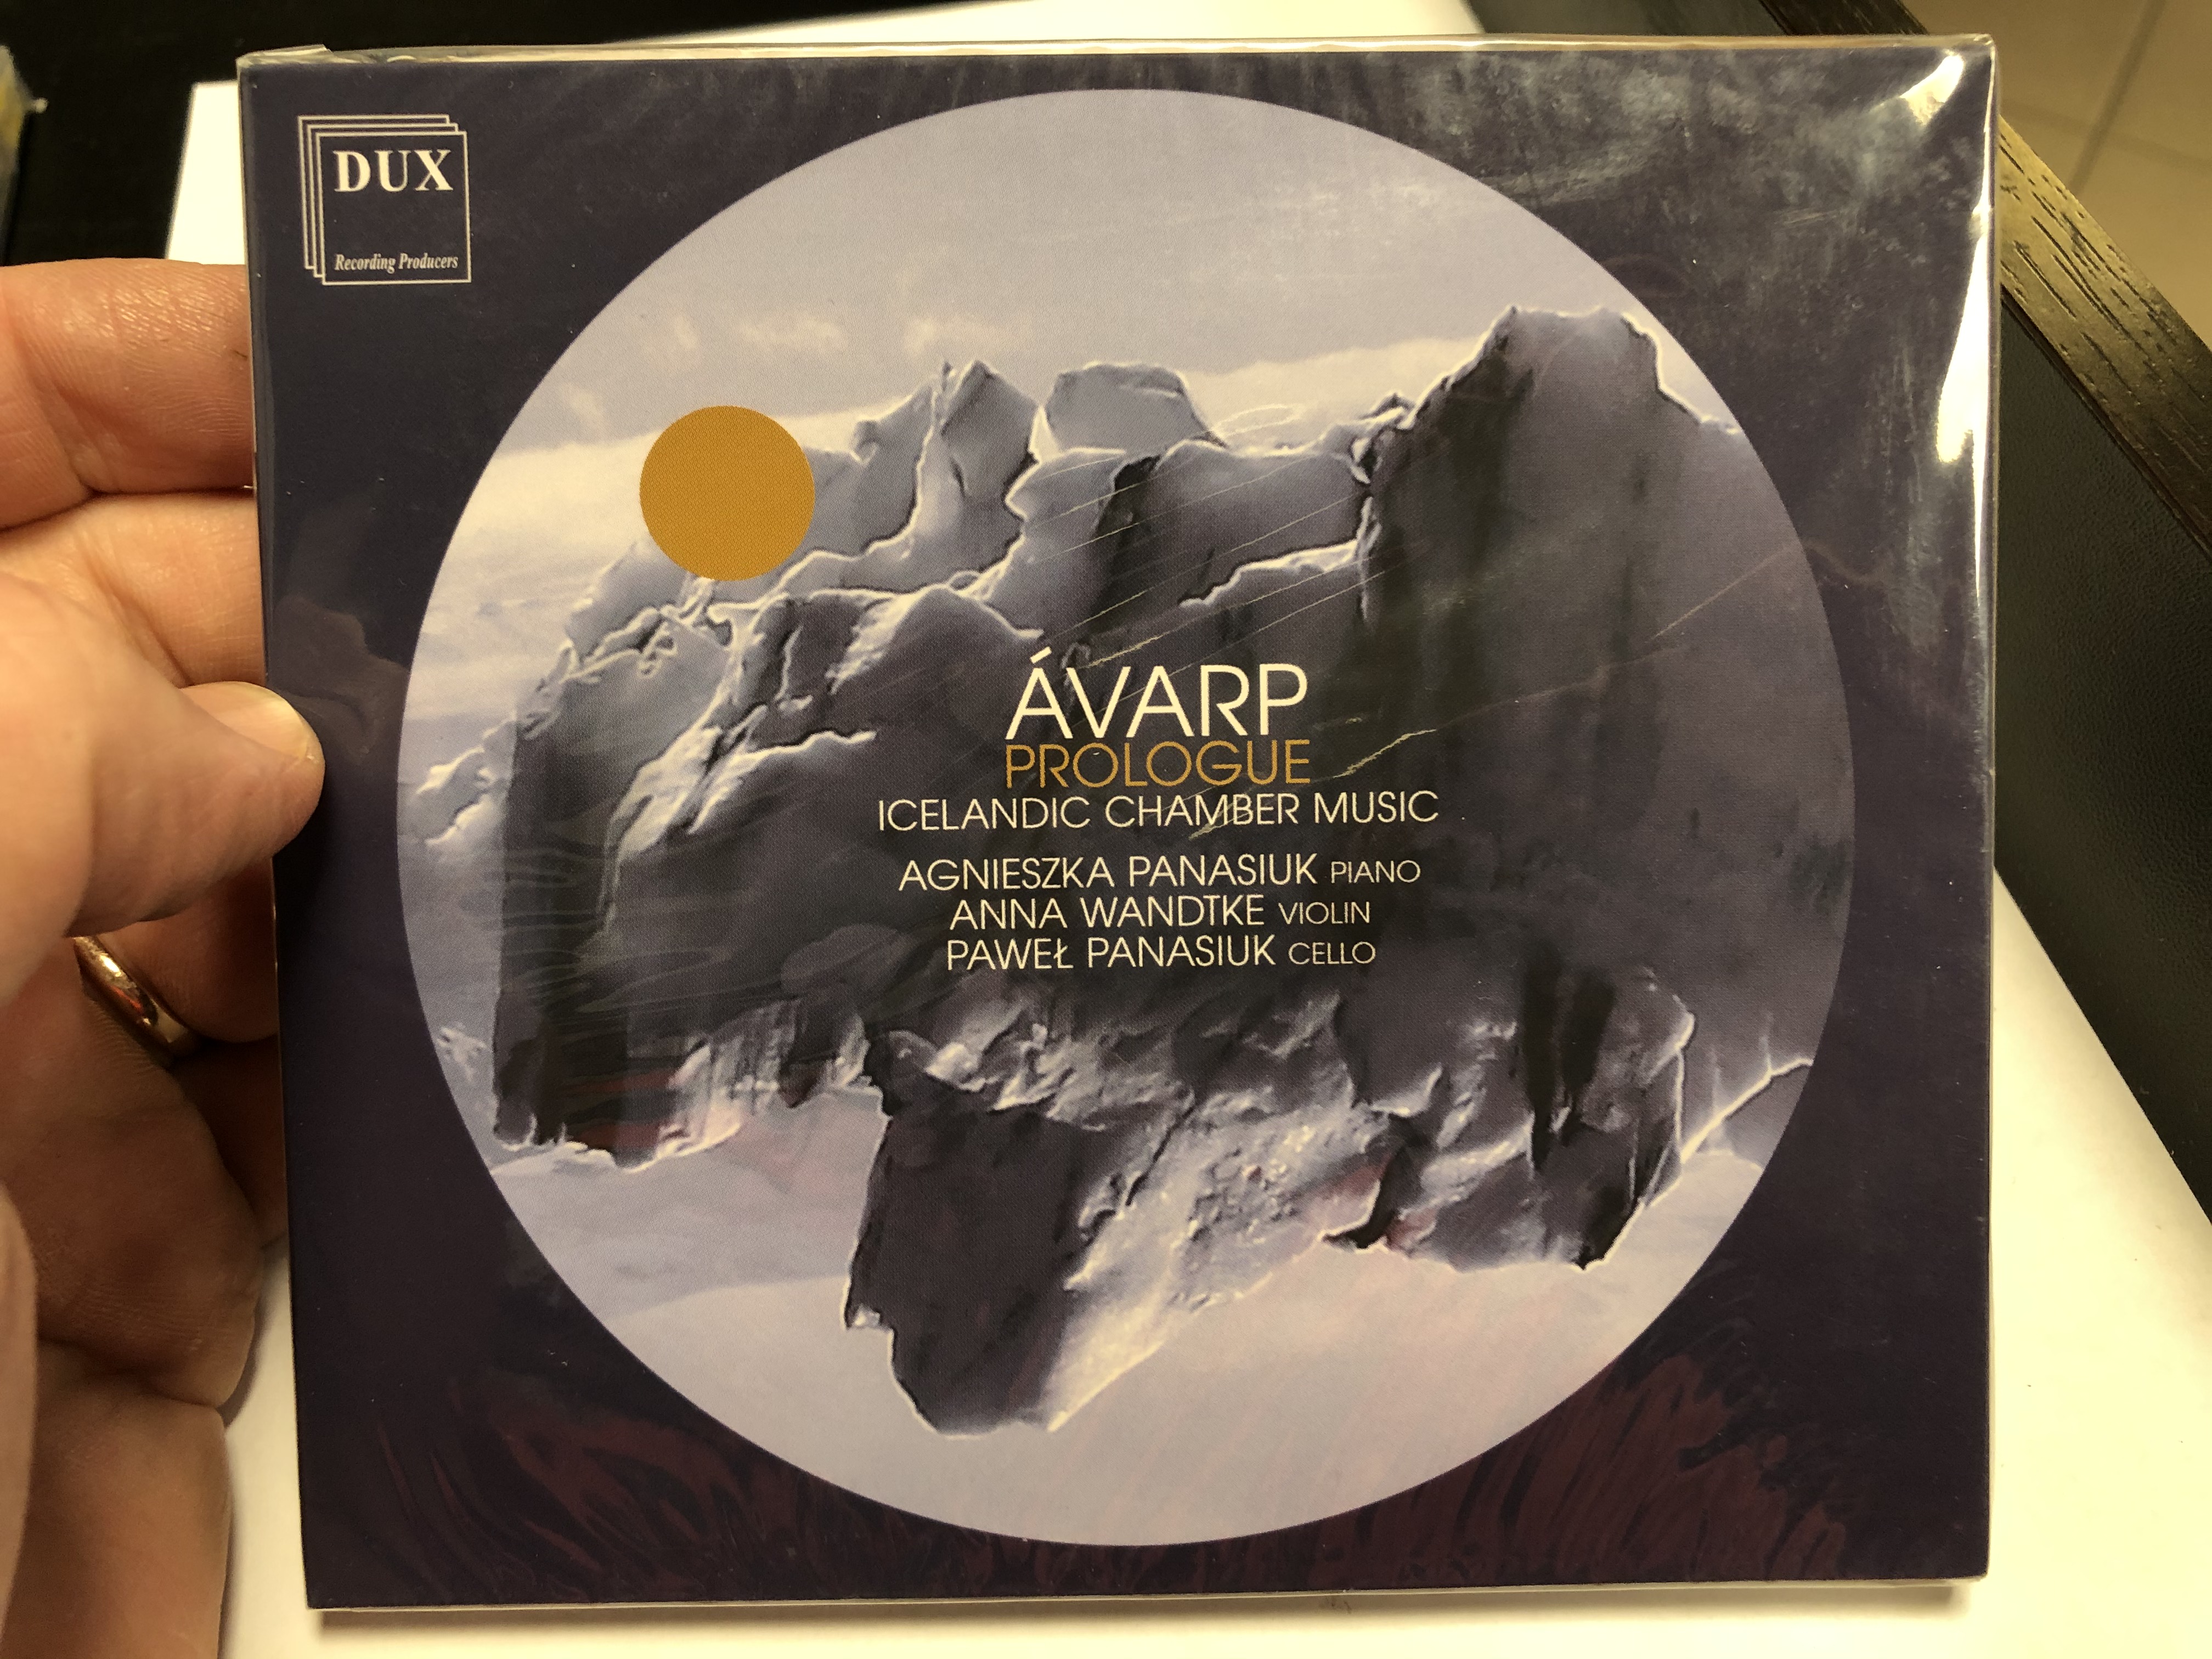 avarp-prologue-icelandic-chamber-music-agnieszka-panasiuk-piano-anna-wandtke-violin-pawel-panasiuk-cello-dux-recording-audio-cd-2020-dux-1675-1-.jpg